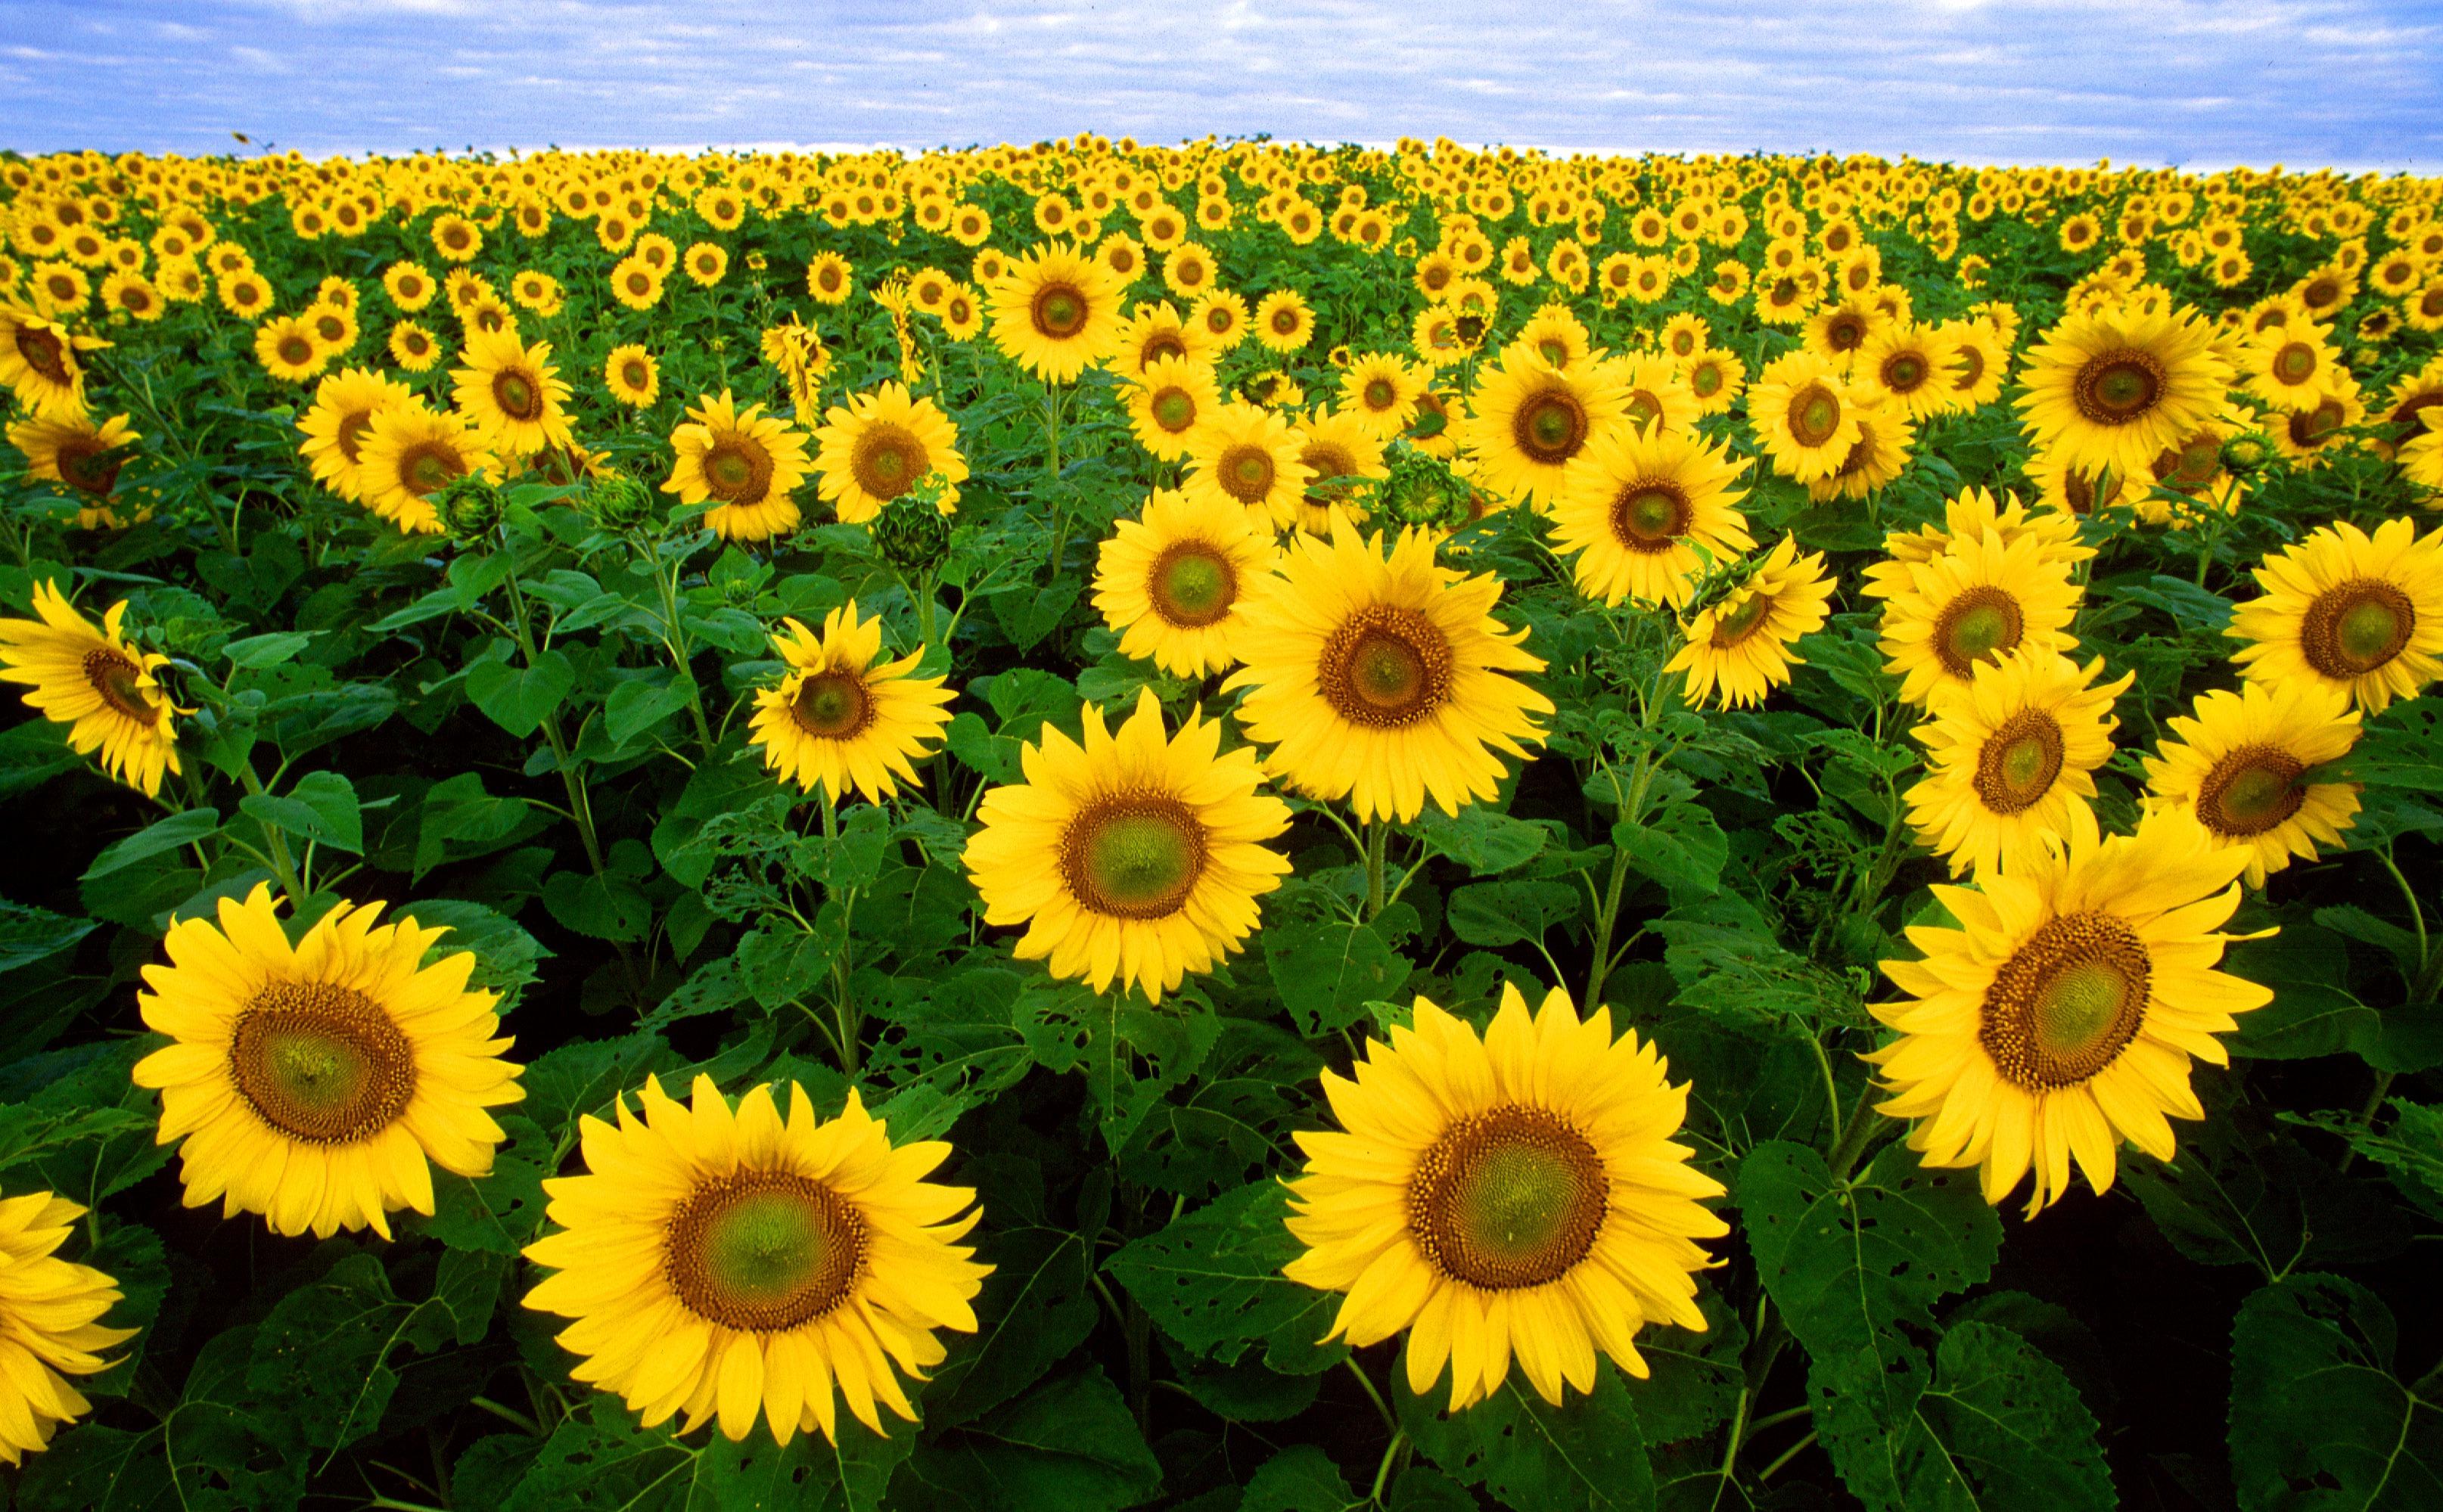 sunflower field under blue sunny sky [1920x1080]